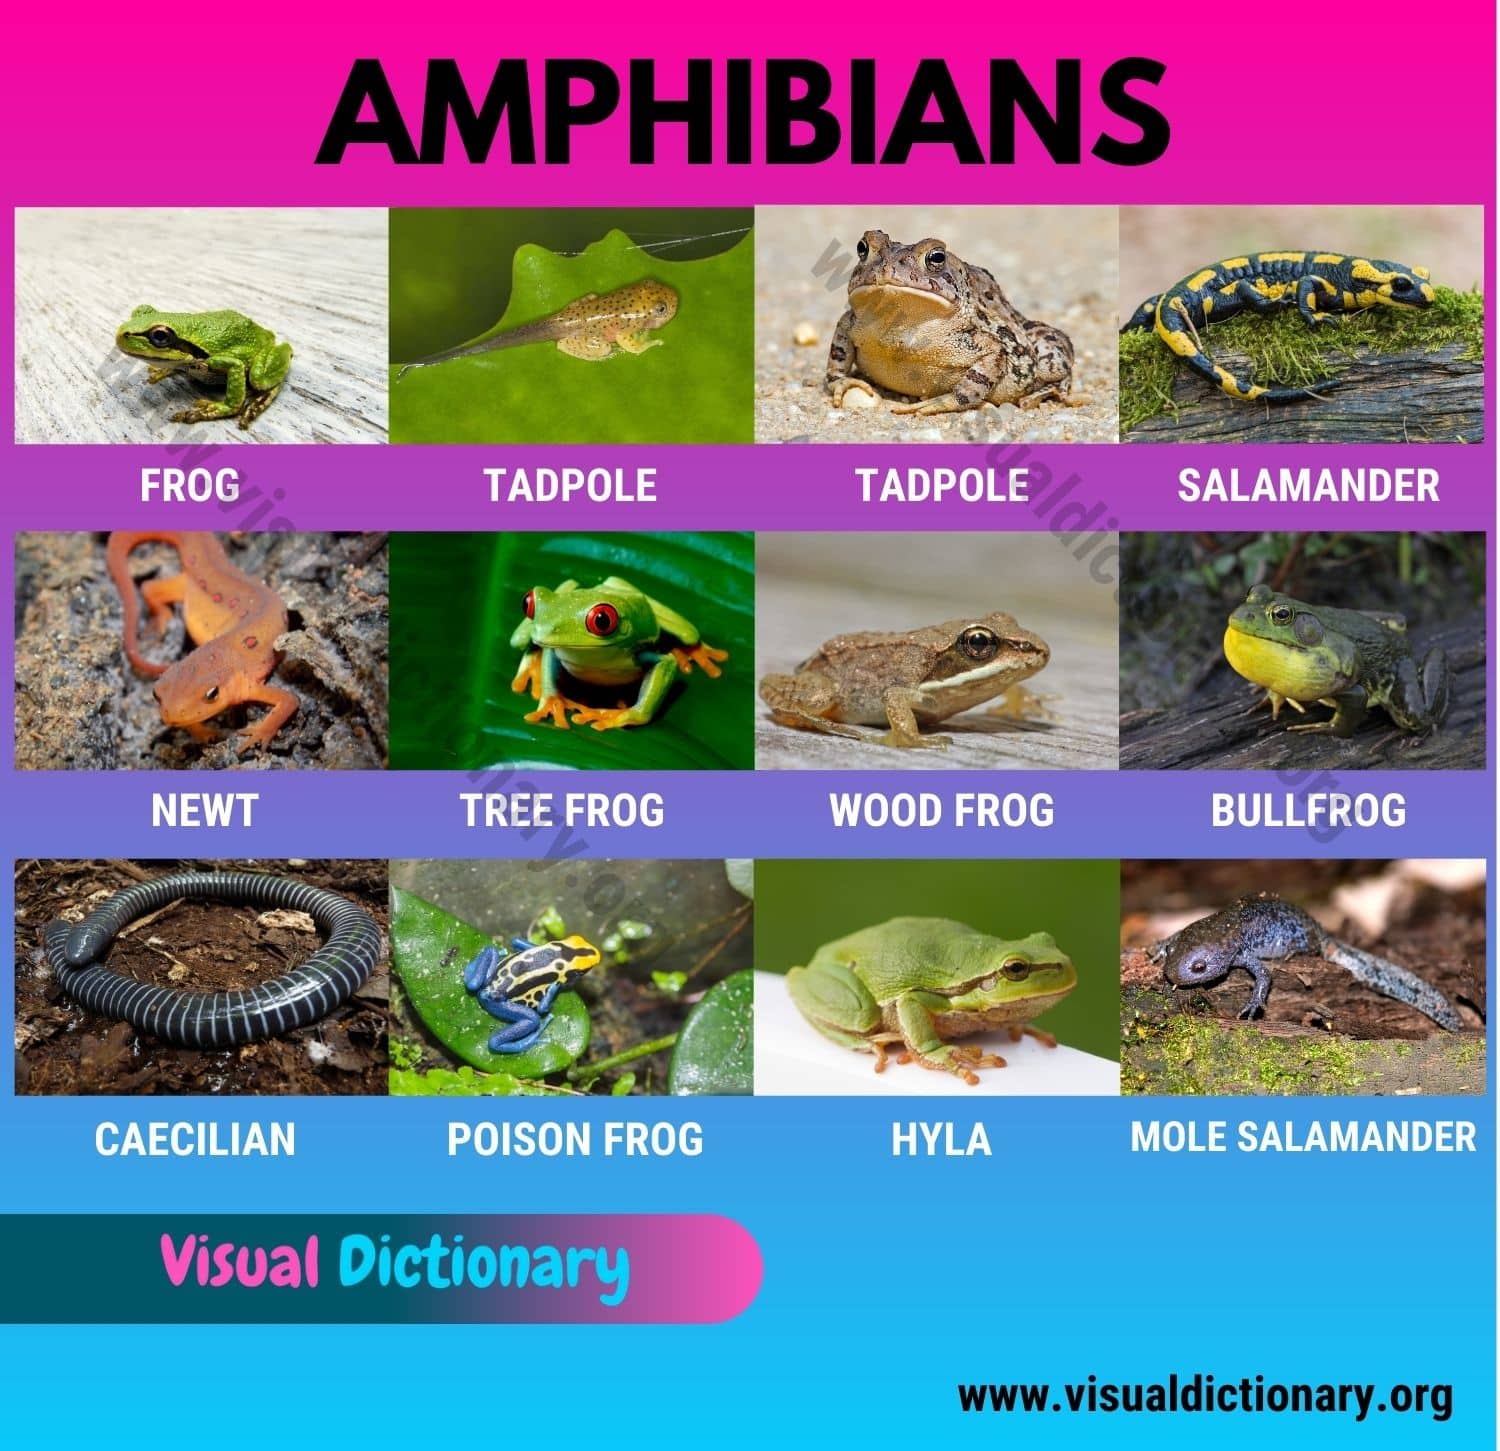 Amphibians: 15 Common Names of Amphibians | Great List of Amphibians -  Visual Dictionary